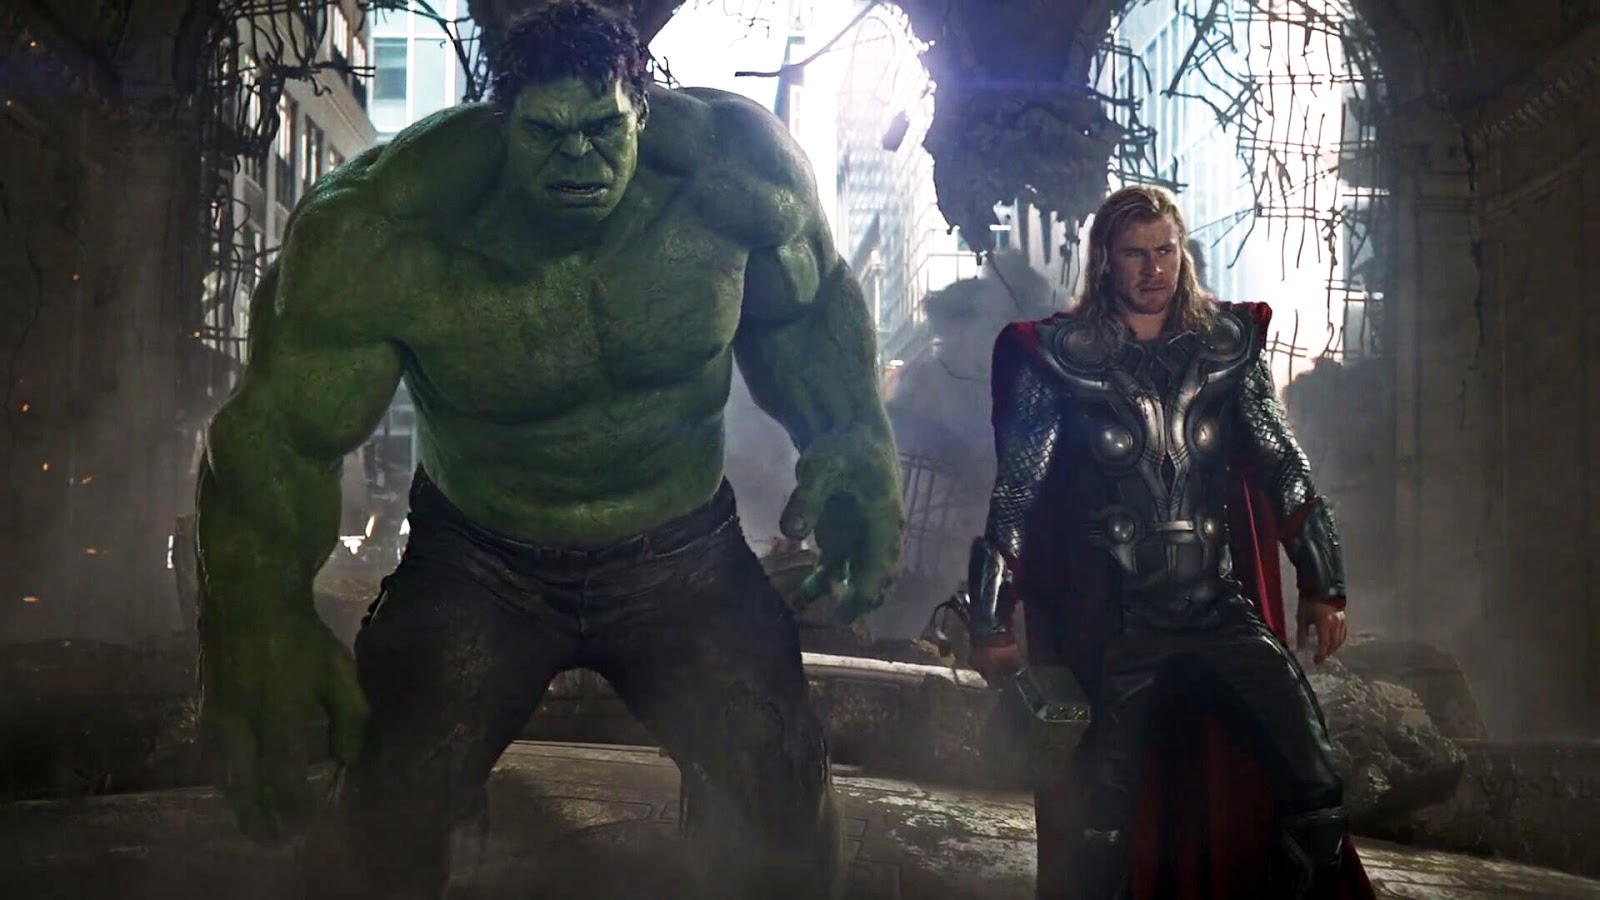 The Similarities Between Avengers Thor And Endgame Cap アベンジャーズ の第1作めの雷神ソー と エンドゲーム のキャプテン アメリカのムジョルニアを使ったバトルの殺陣は同じ というマーベル ファンの鋭い指摘 Cia Movie News